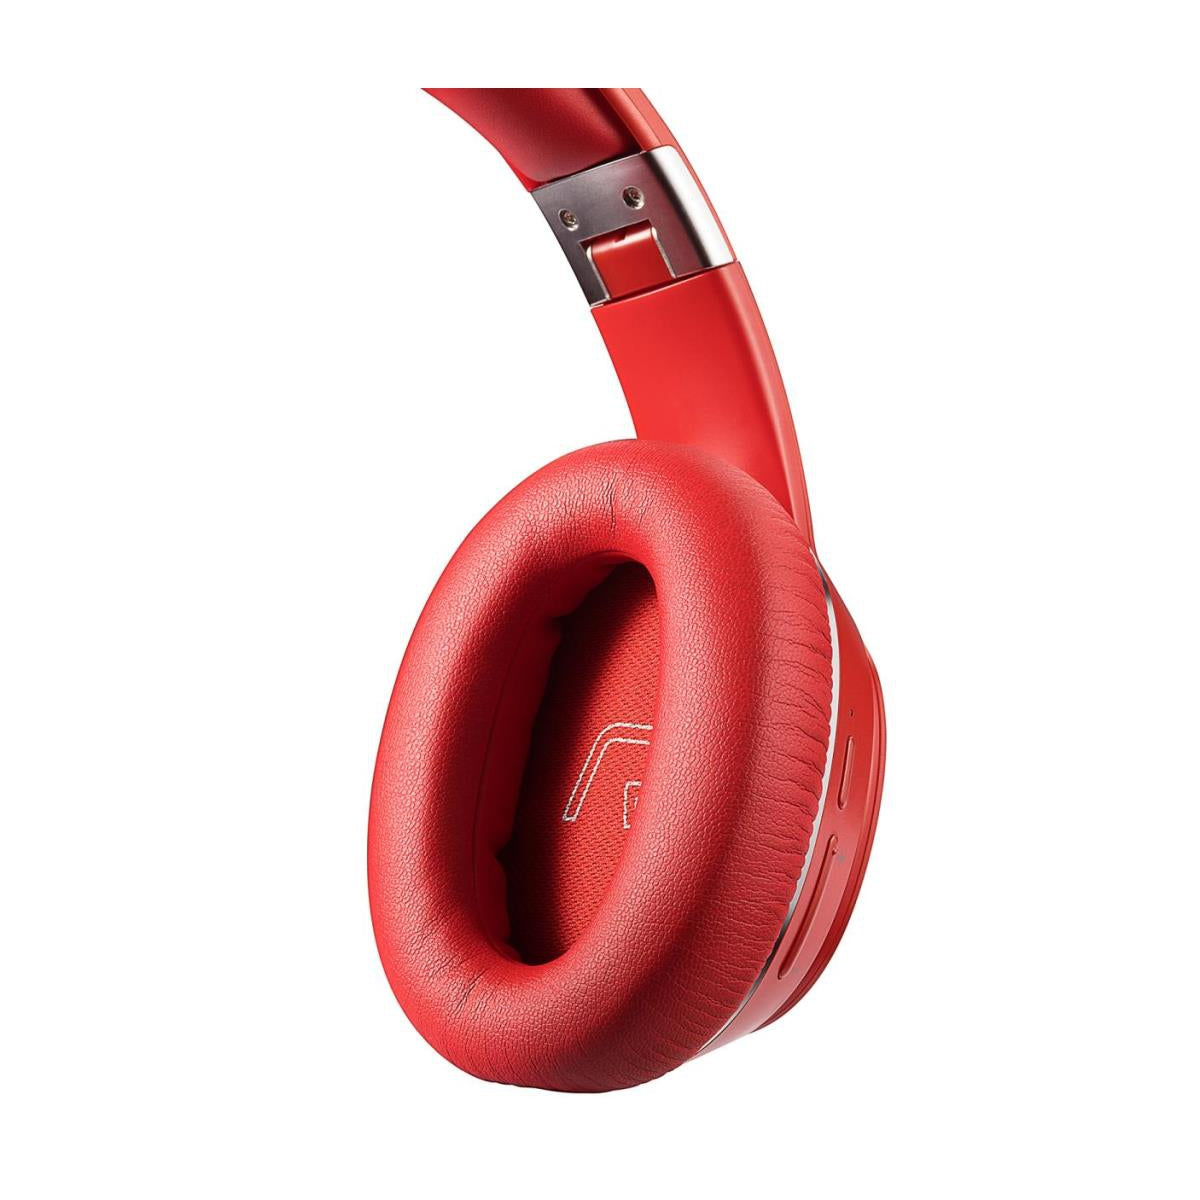 Edifier W820BT Bluetooth Over Ear Headphones, Red - New